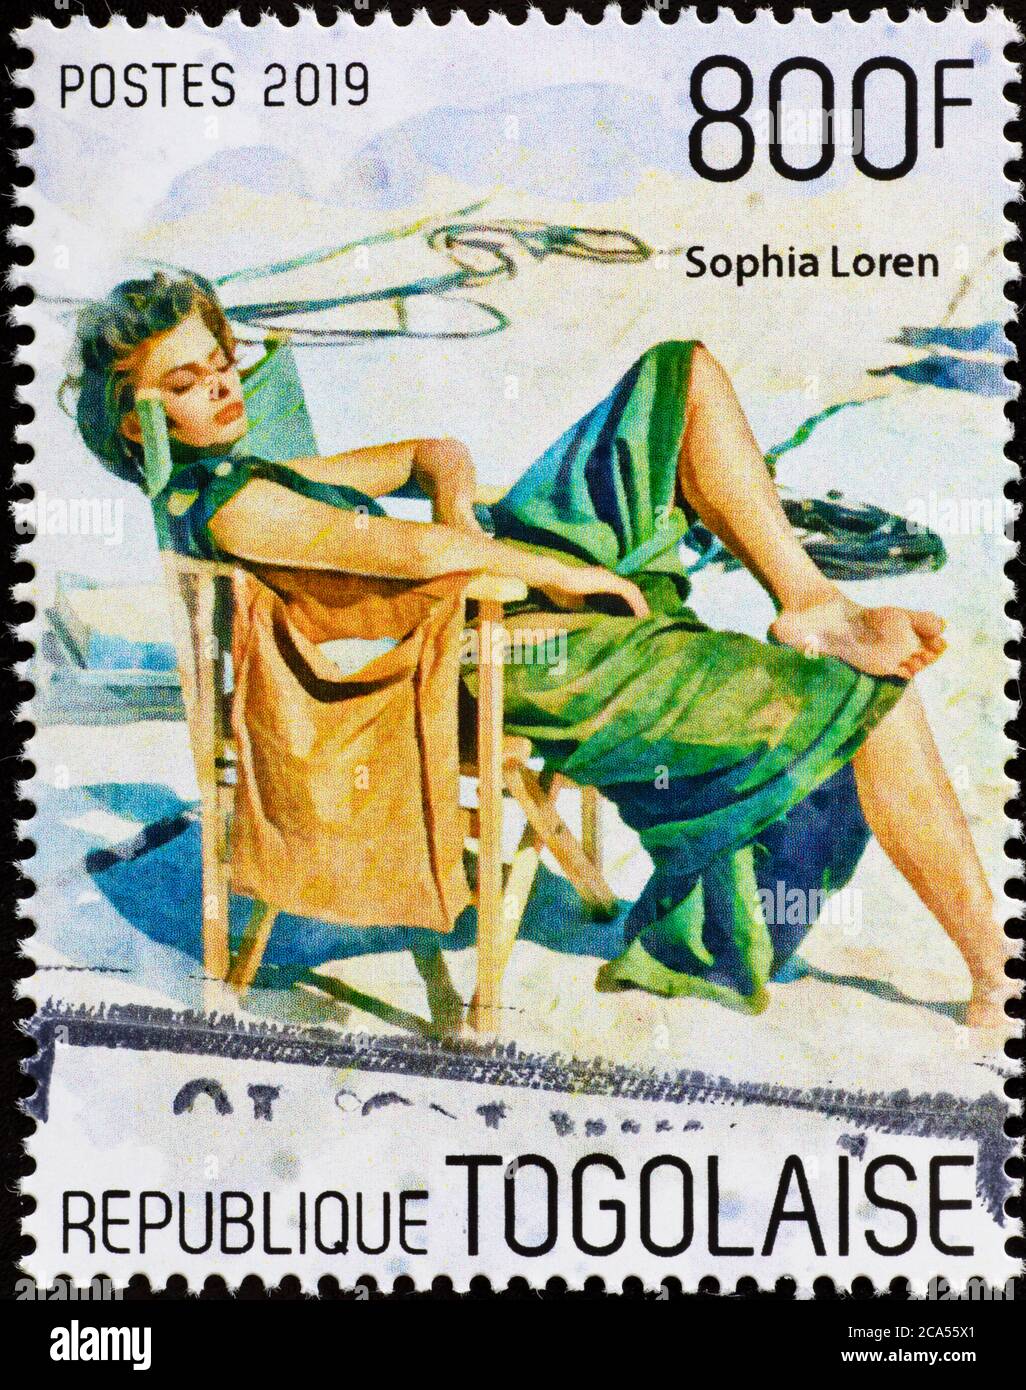 Sofia Loren on postage stamp of Togo Stock Photo